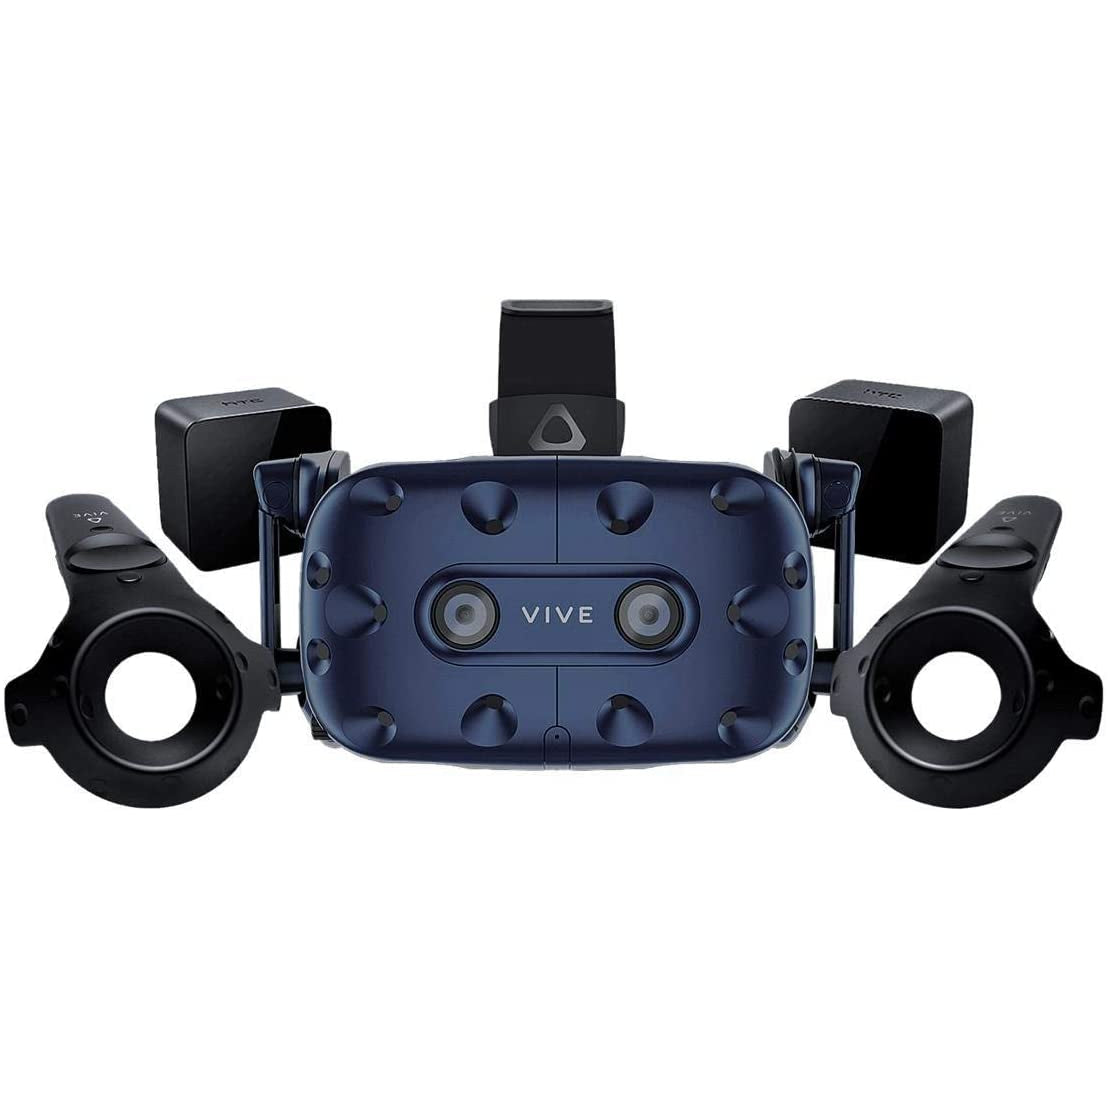 HTC Vive Pro Starter Kit VR Virtual Reality Headset - Blue (99HAPY001-00) - Refurbished